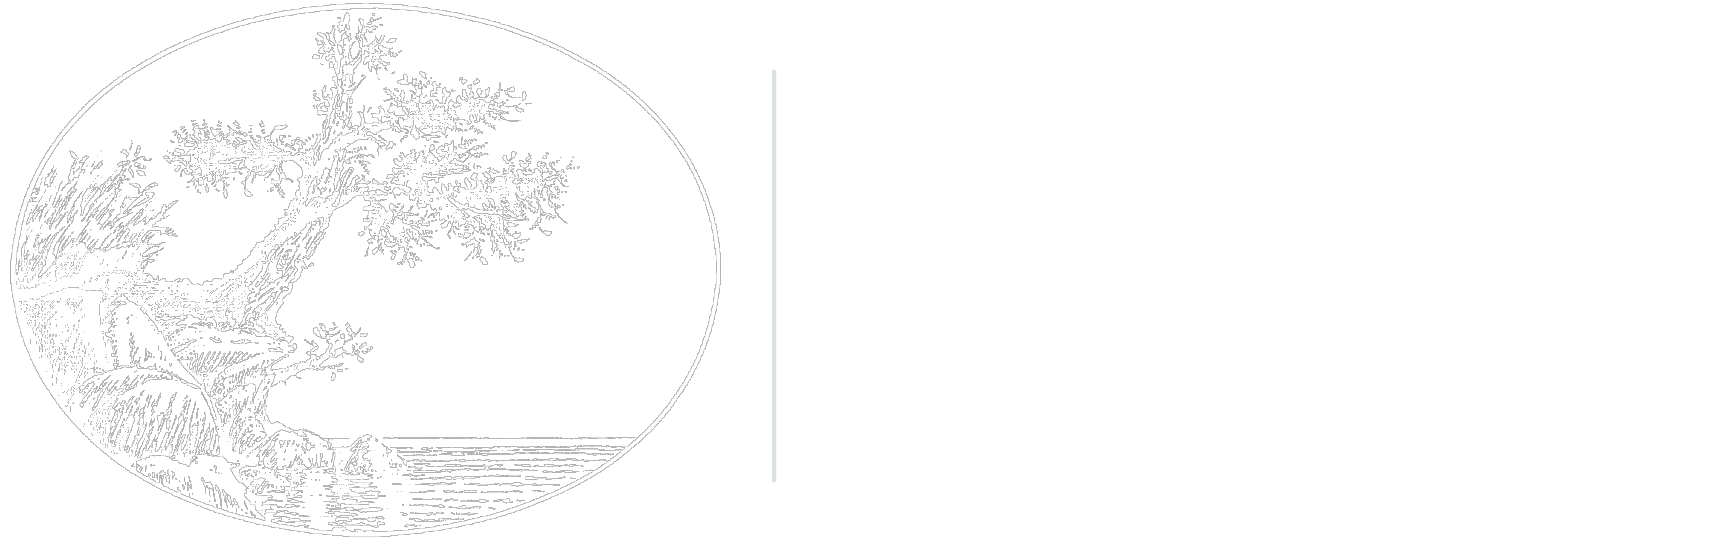 Galiano Conservancy